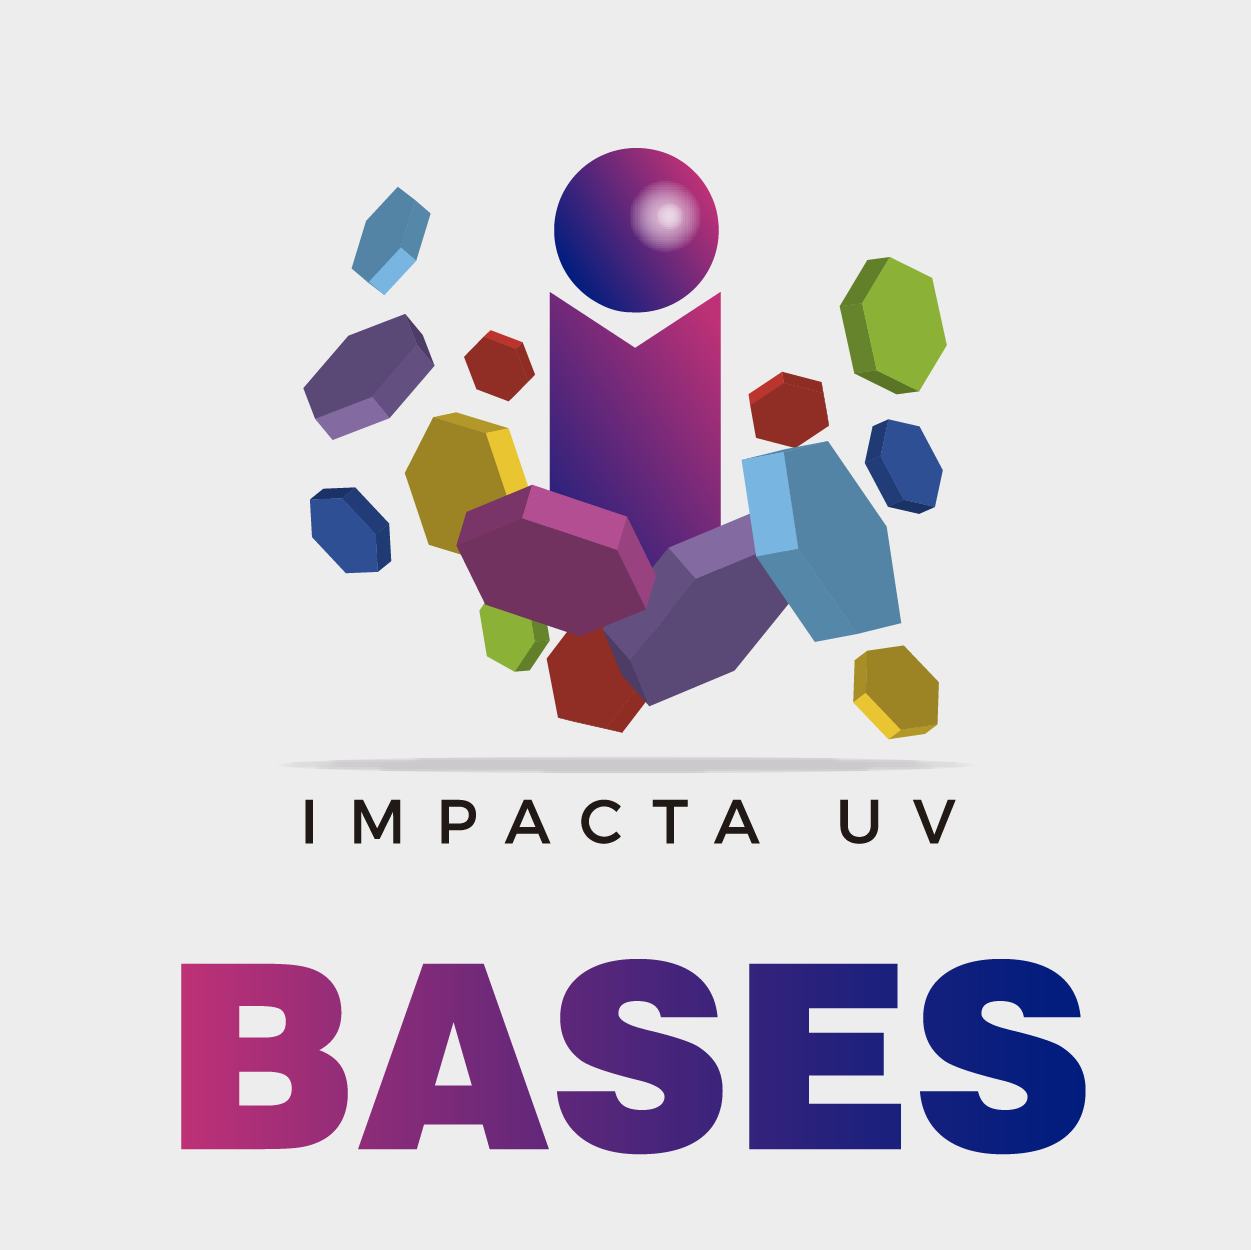 Bases fondos concursables DAE Impacta UV 2019